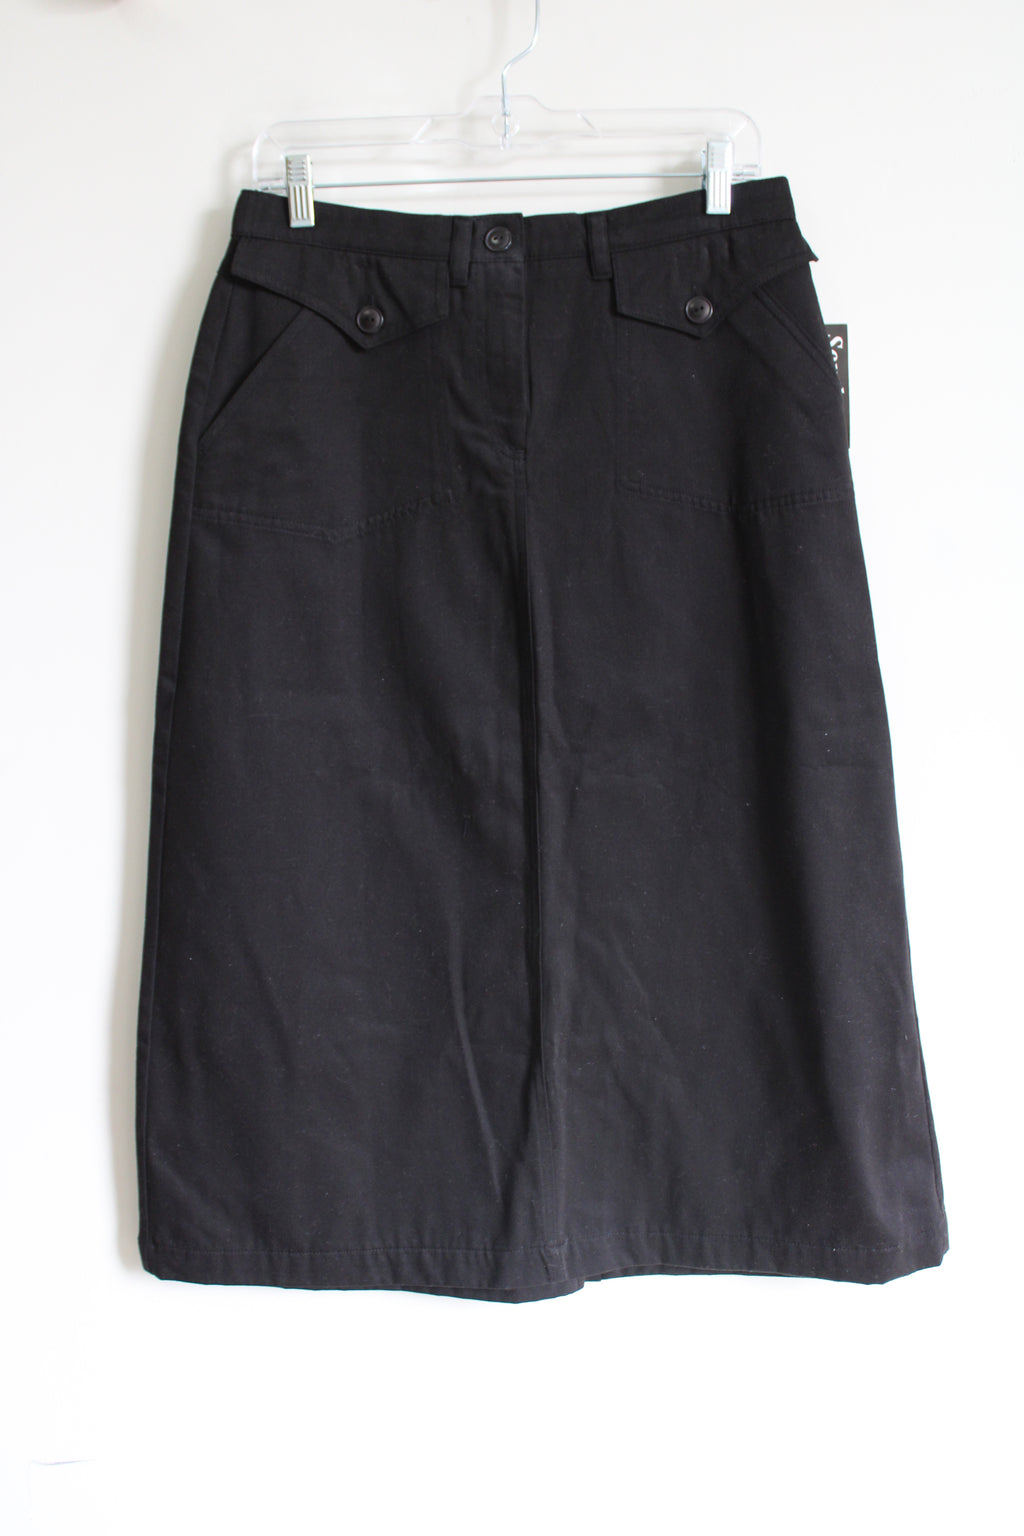 NEW Southern Lady Black Twill Skirt | 10